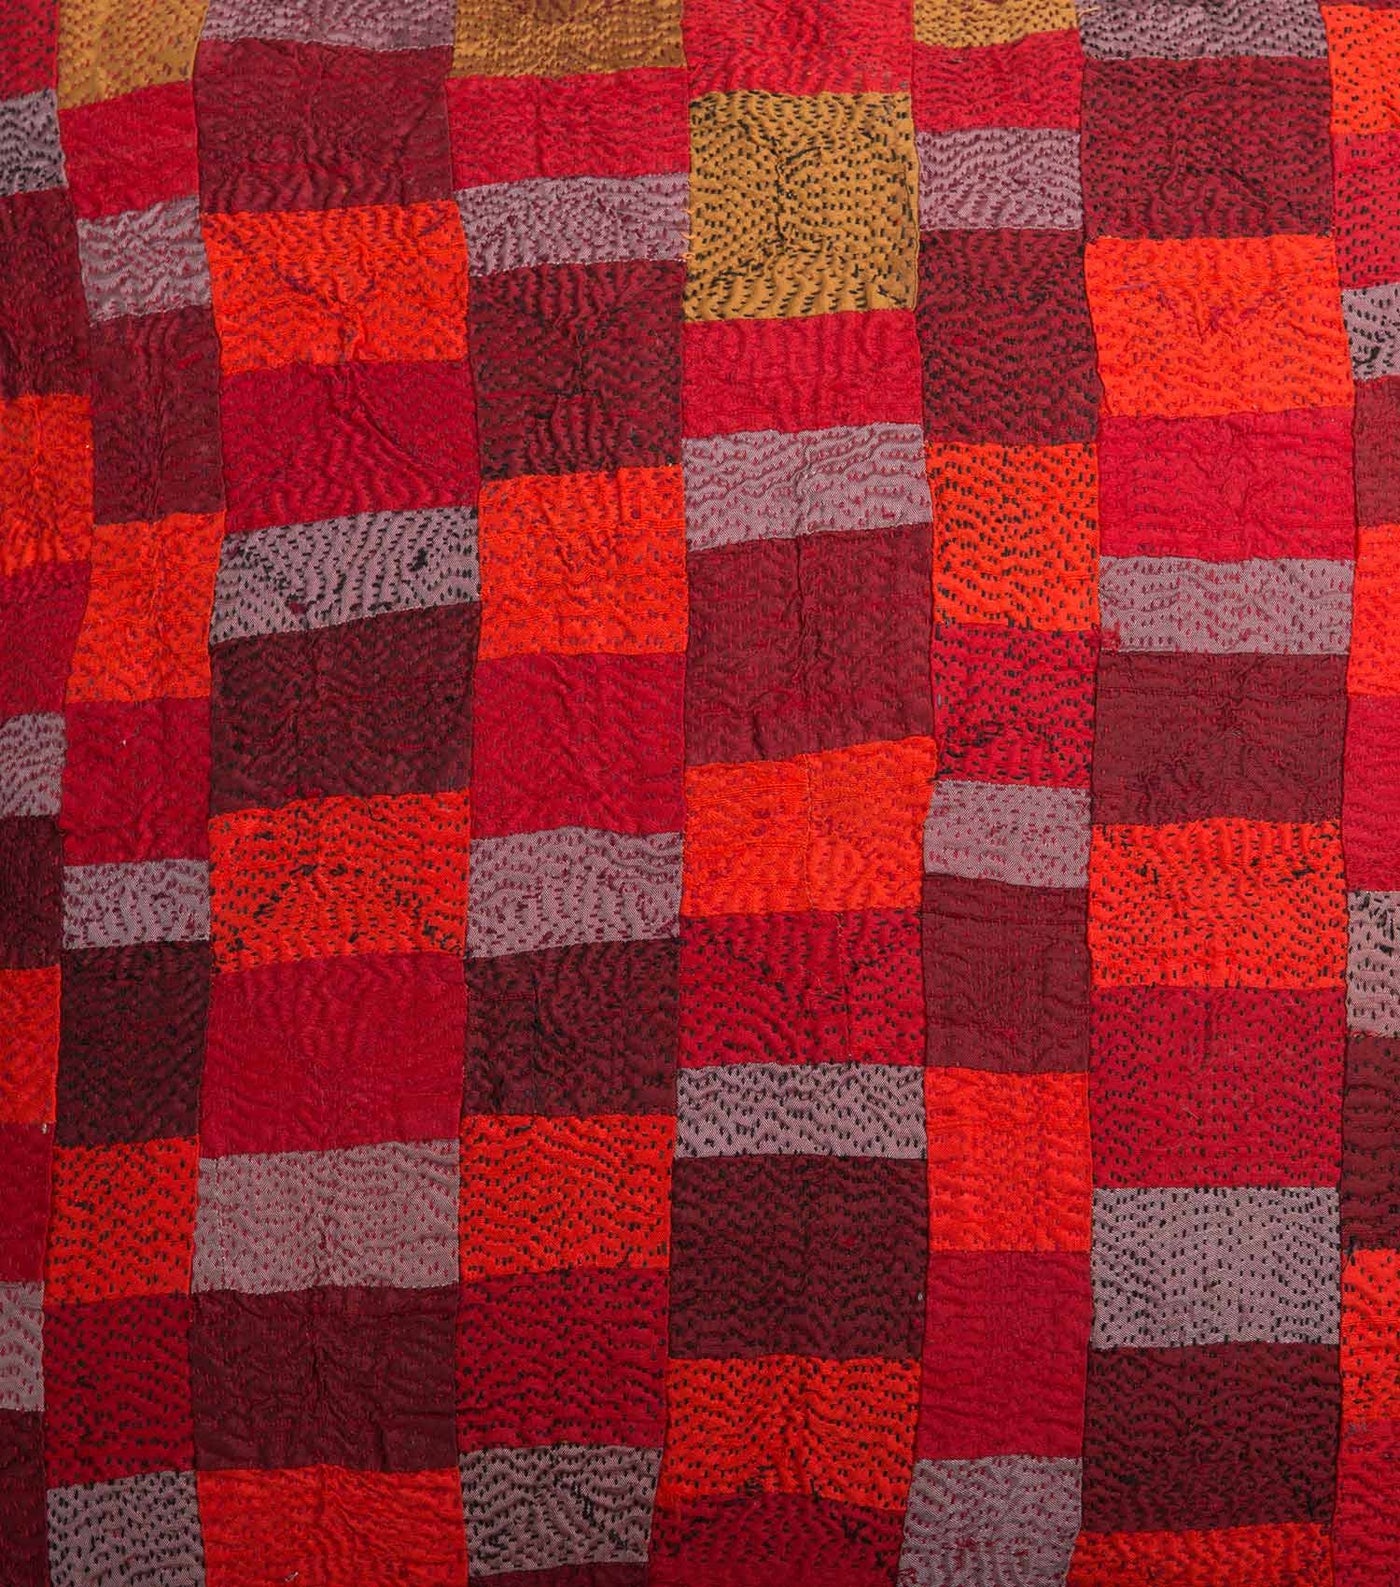 Silk patchwork cushion cover